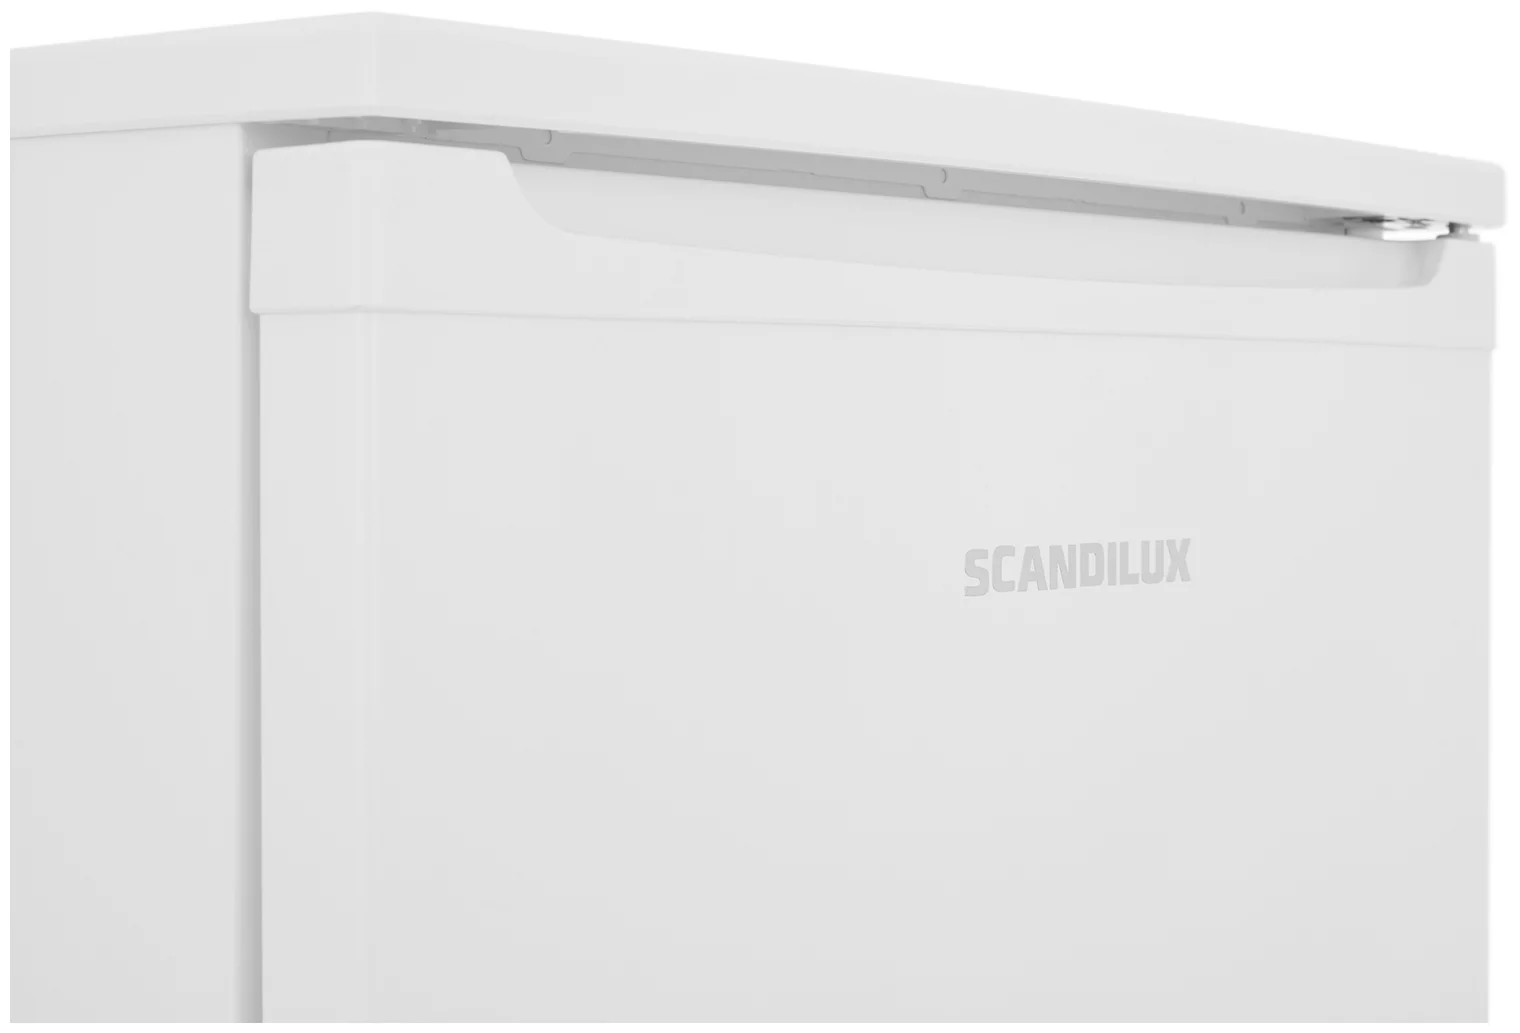 SCANDILUX F 064 W - мощность замораживания: до 4 кг/сутки